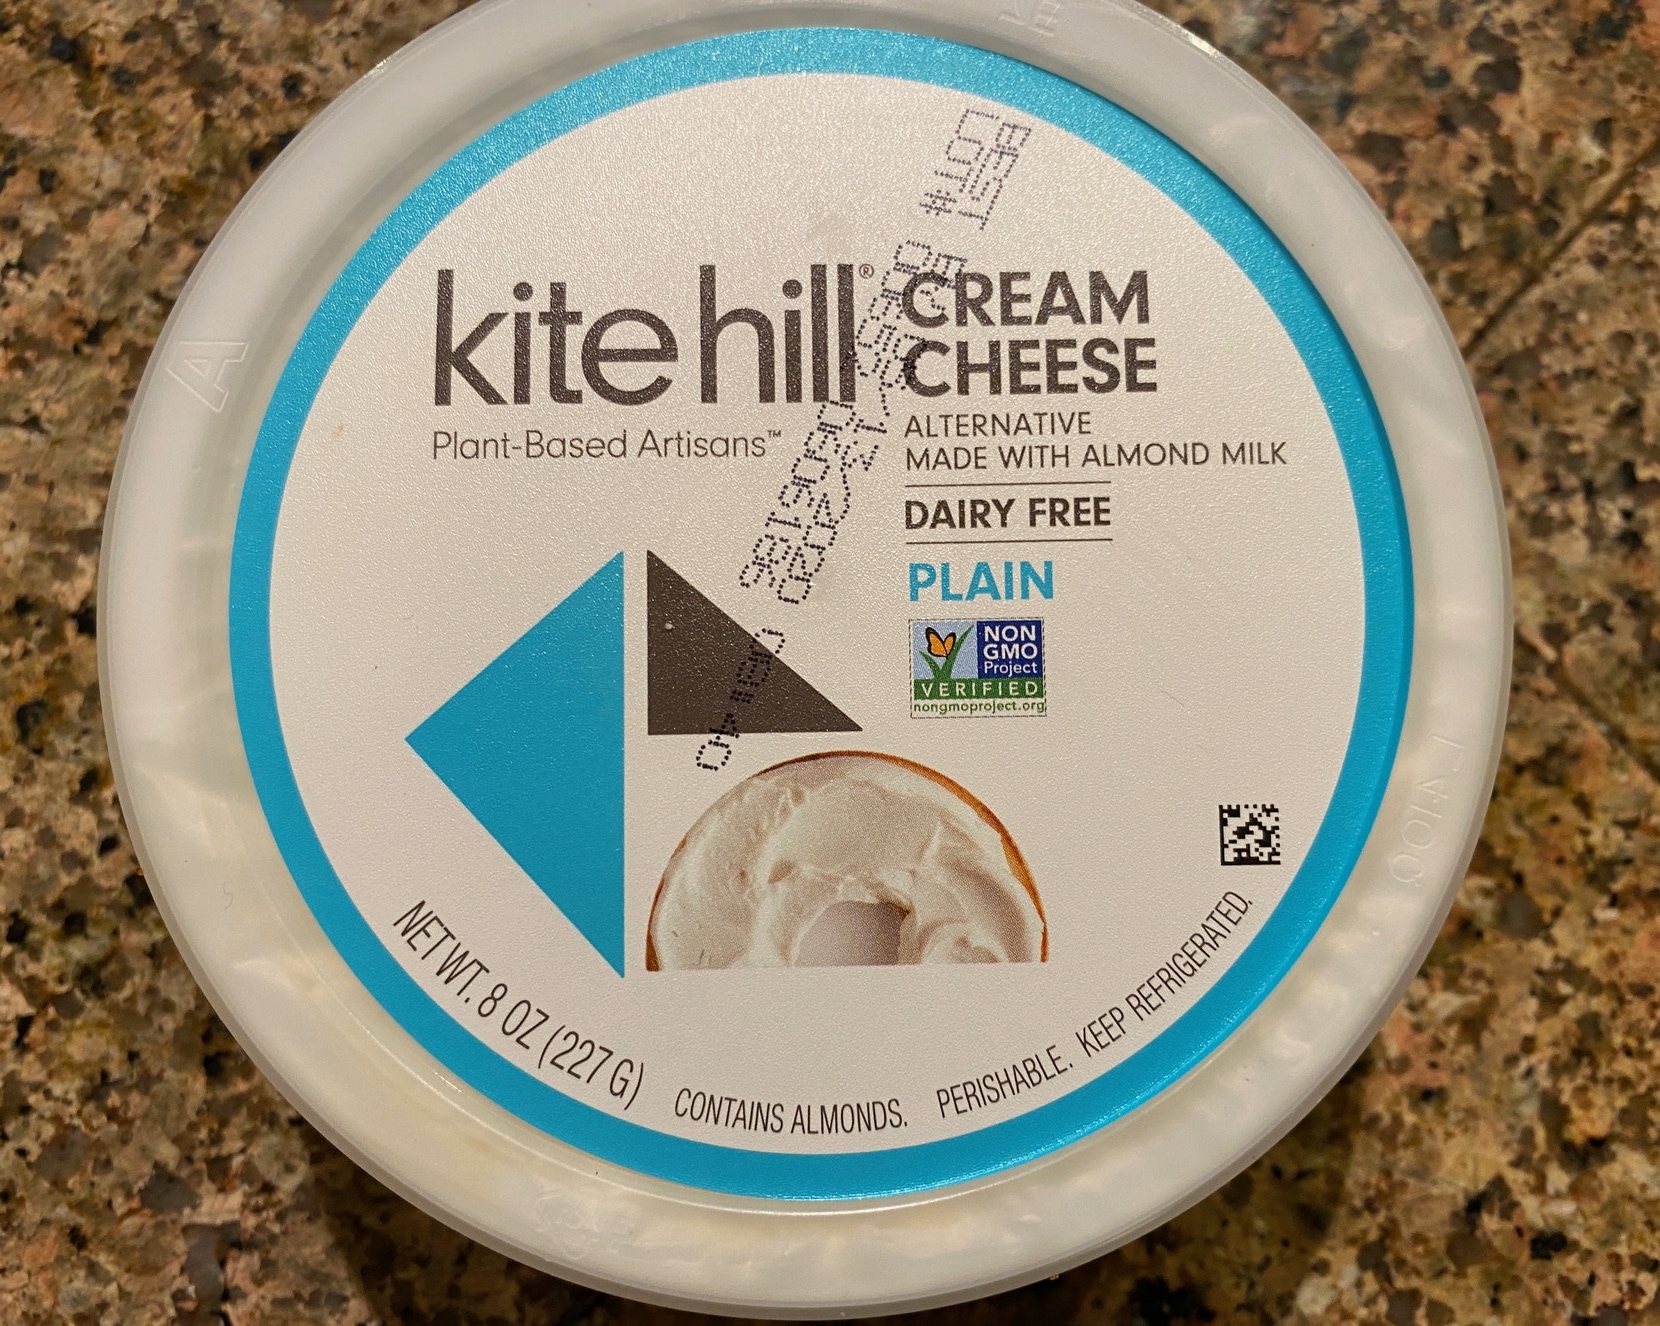 Kite hill cream cheese container